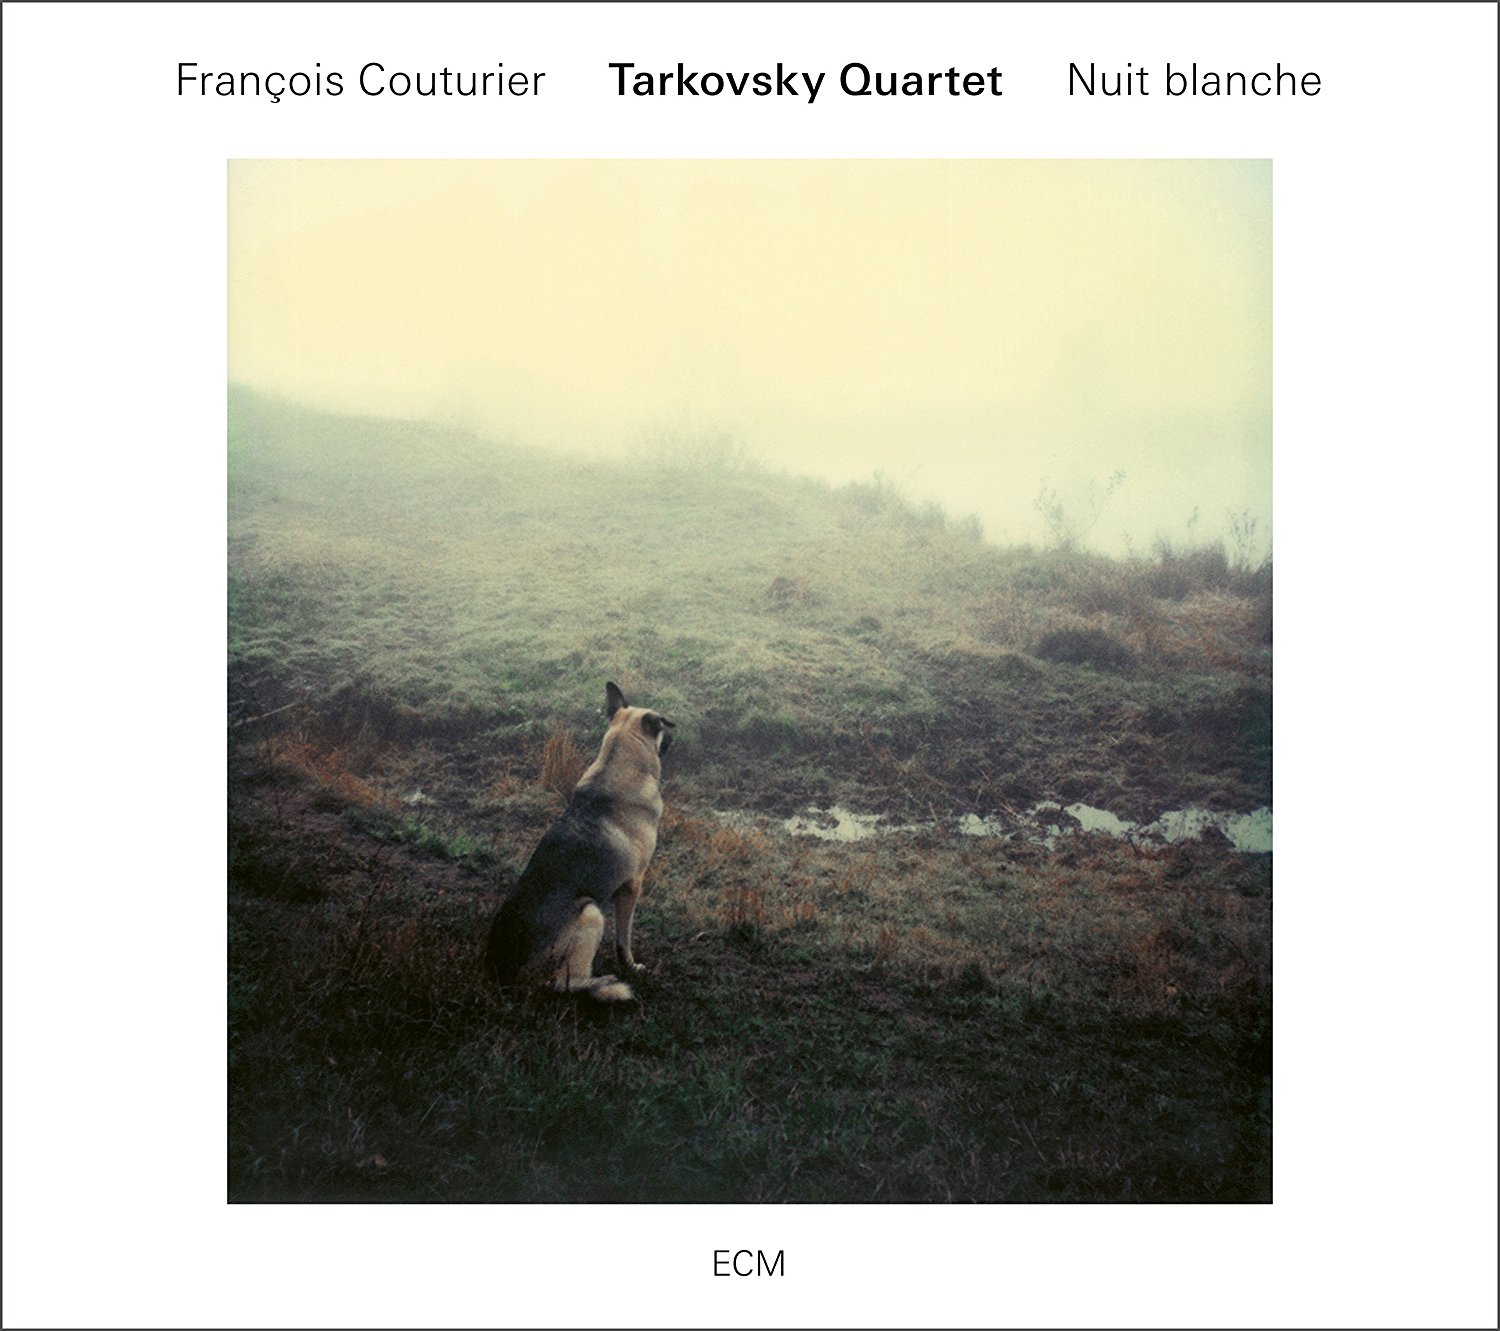 CD REVIEW: Tarkovsky Quartet – Nuit Blanche – News, reviews ...